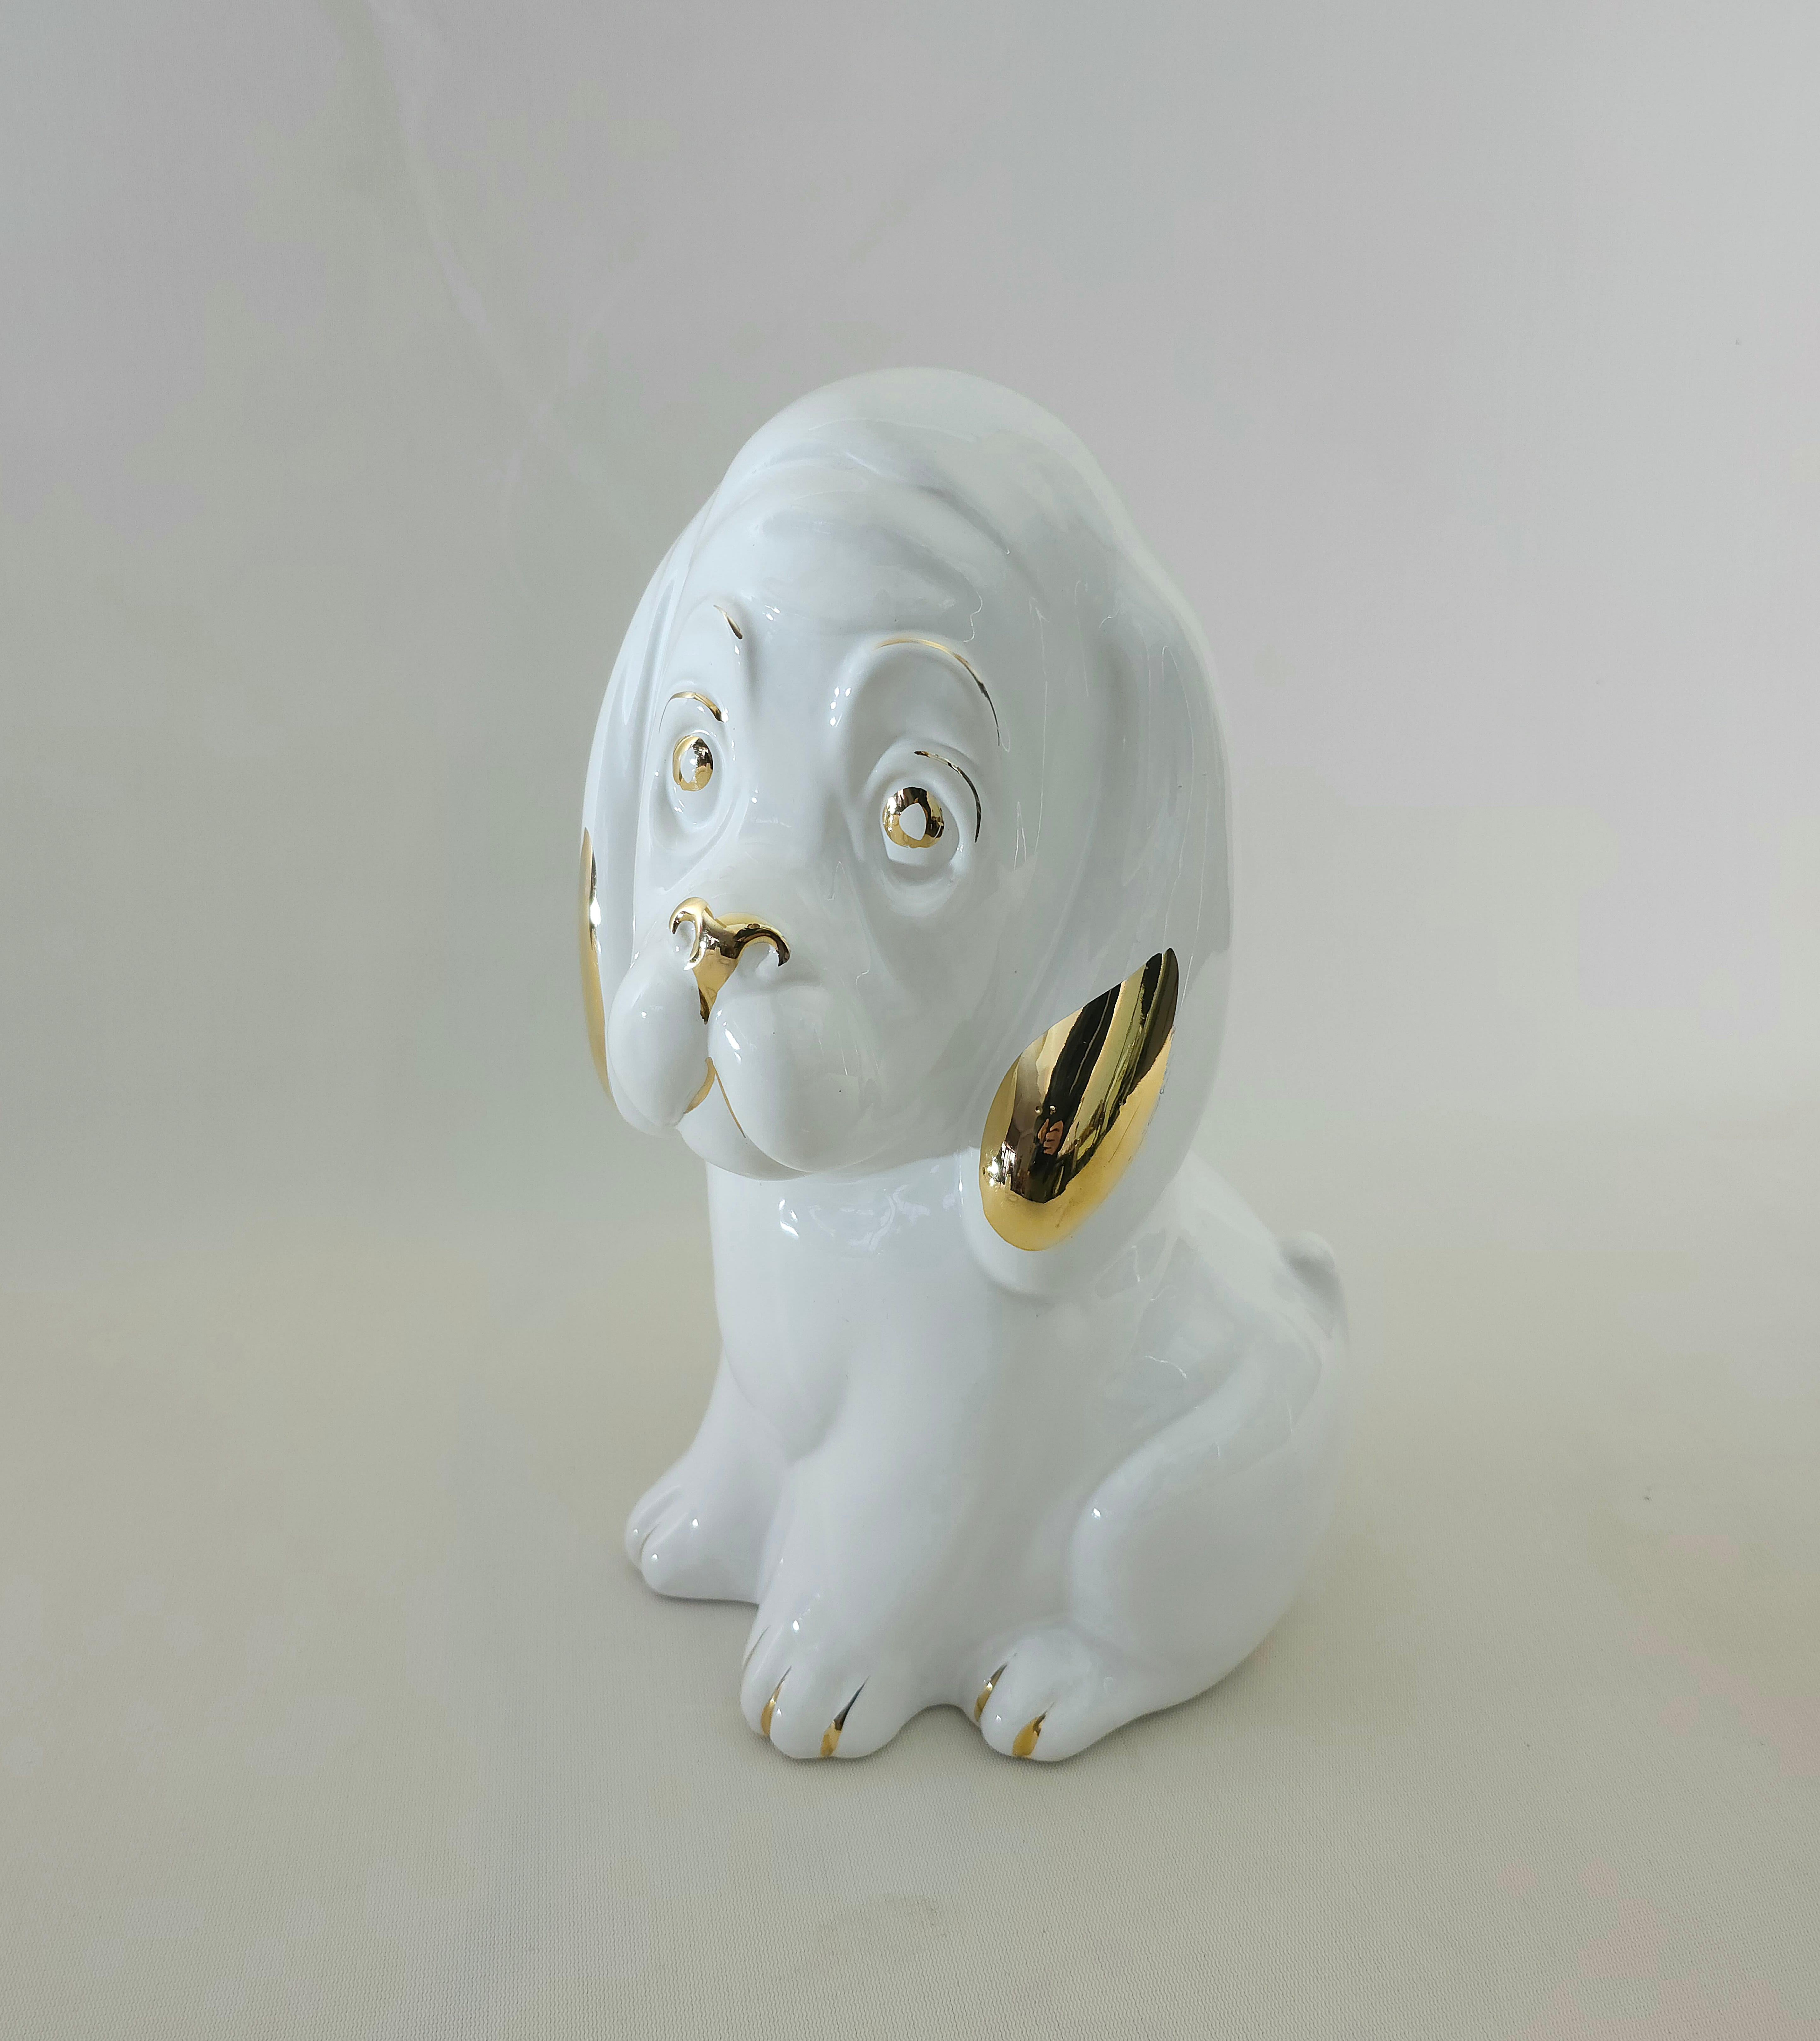 Decorative Object Dog Porcelain Sculpture Midcentury Modern Italian Design 1970s For Sale 2